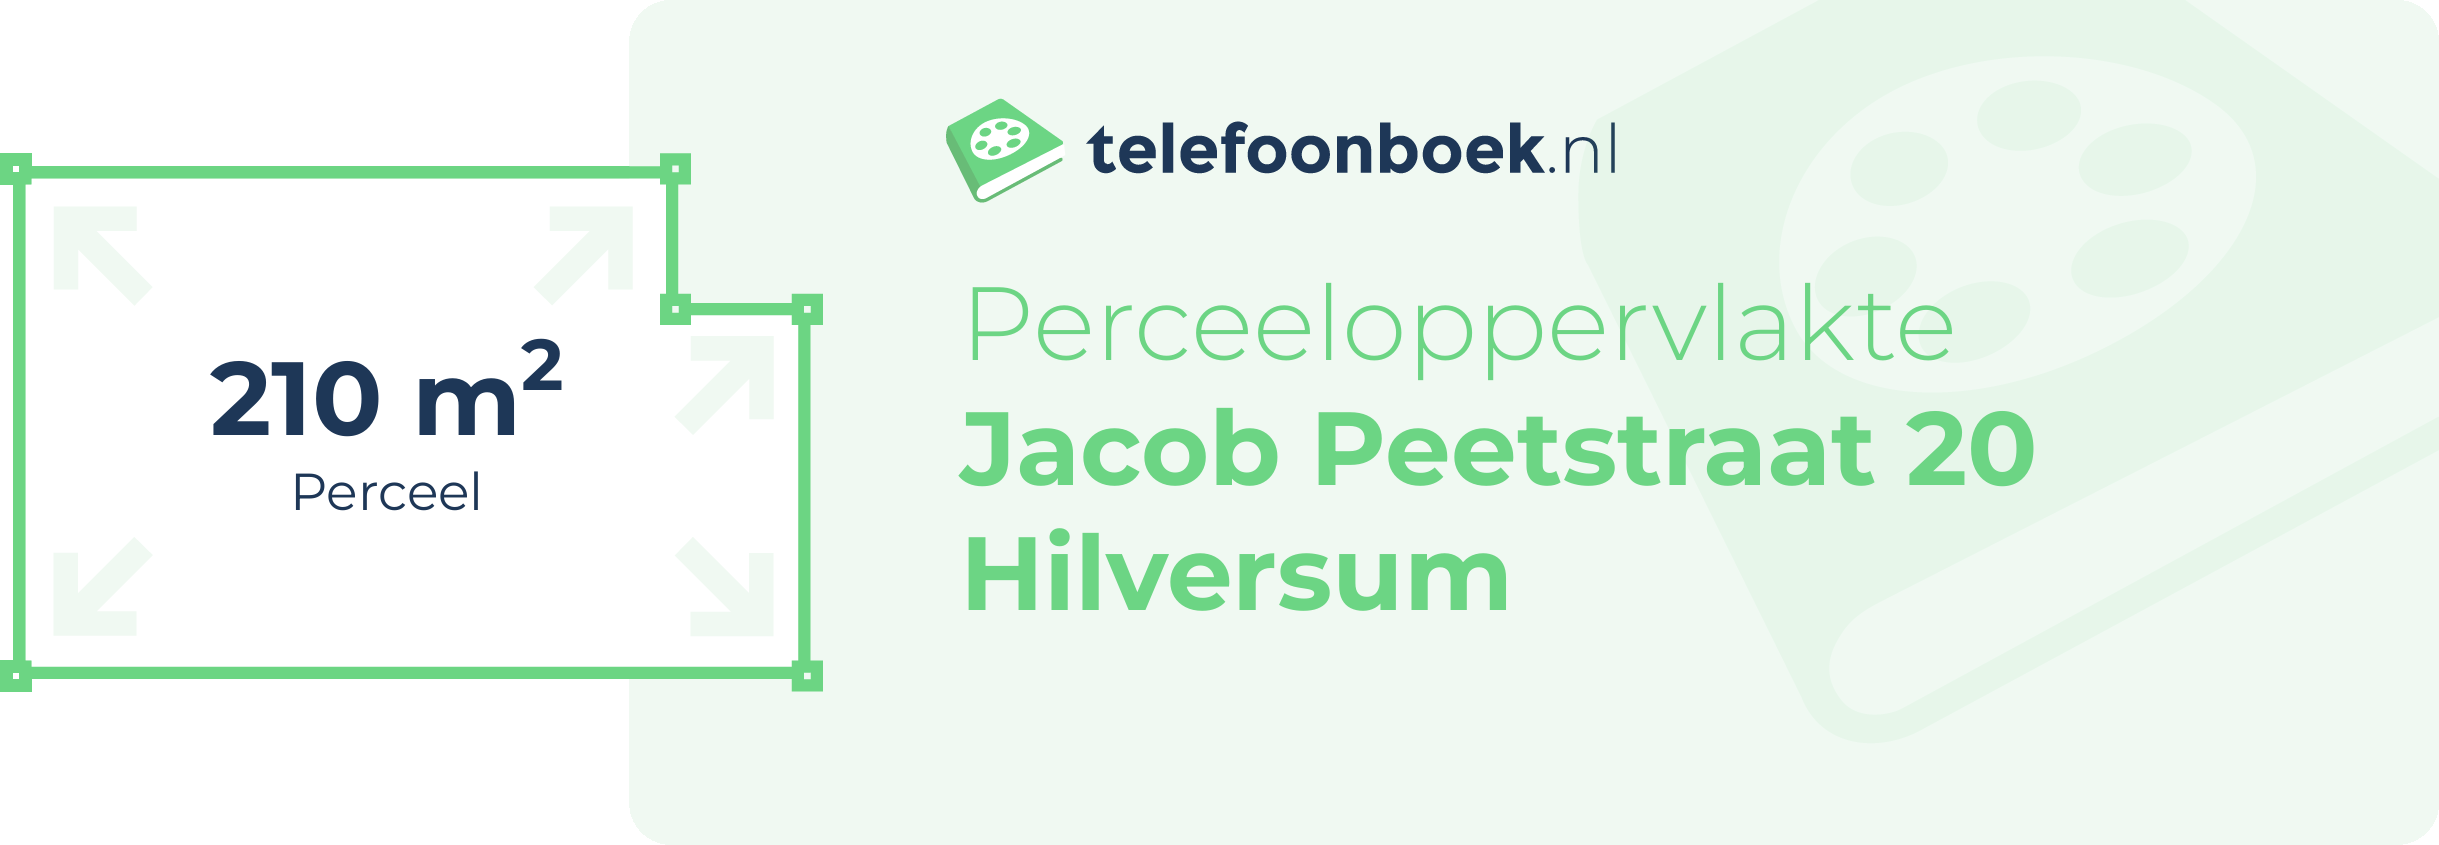 Perceeloppervlakte Jacob Peetstraat 20 Hilversum